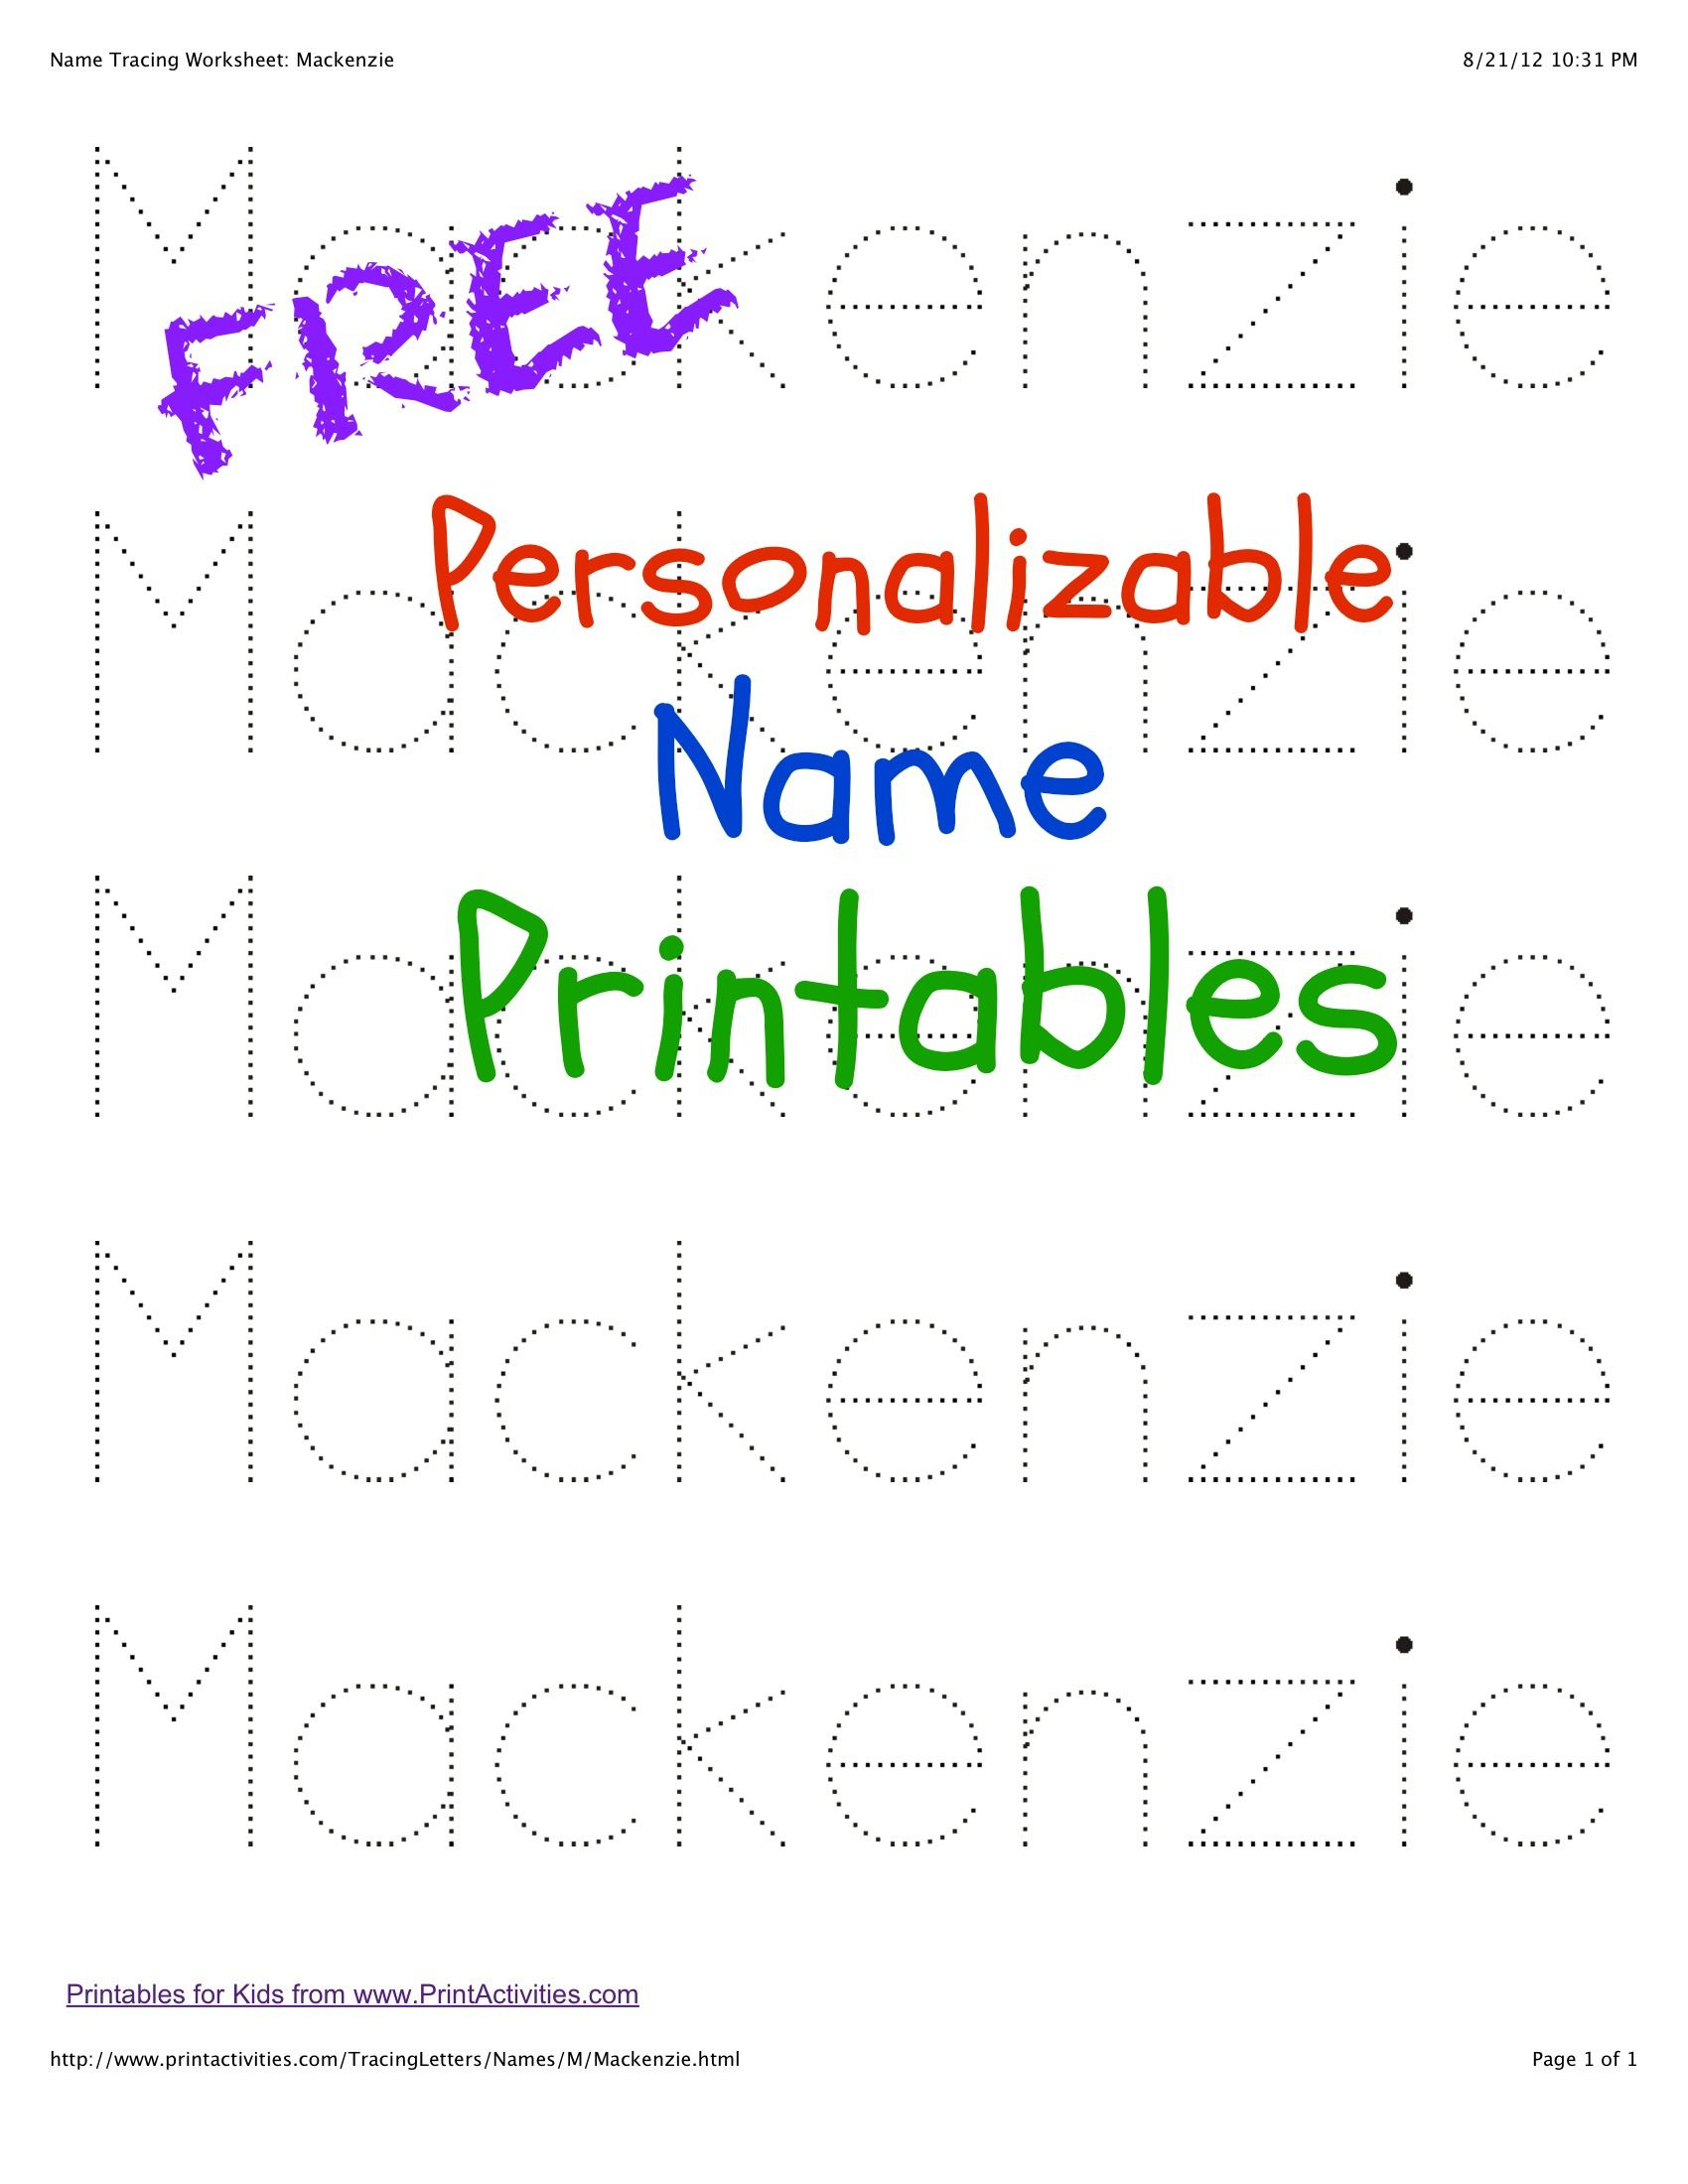 Pintheresa Mcduffie On Educational For Kids | Pinterest - Free Printable Name Worksheets For Kindergarten